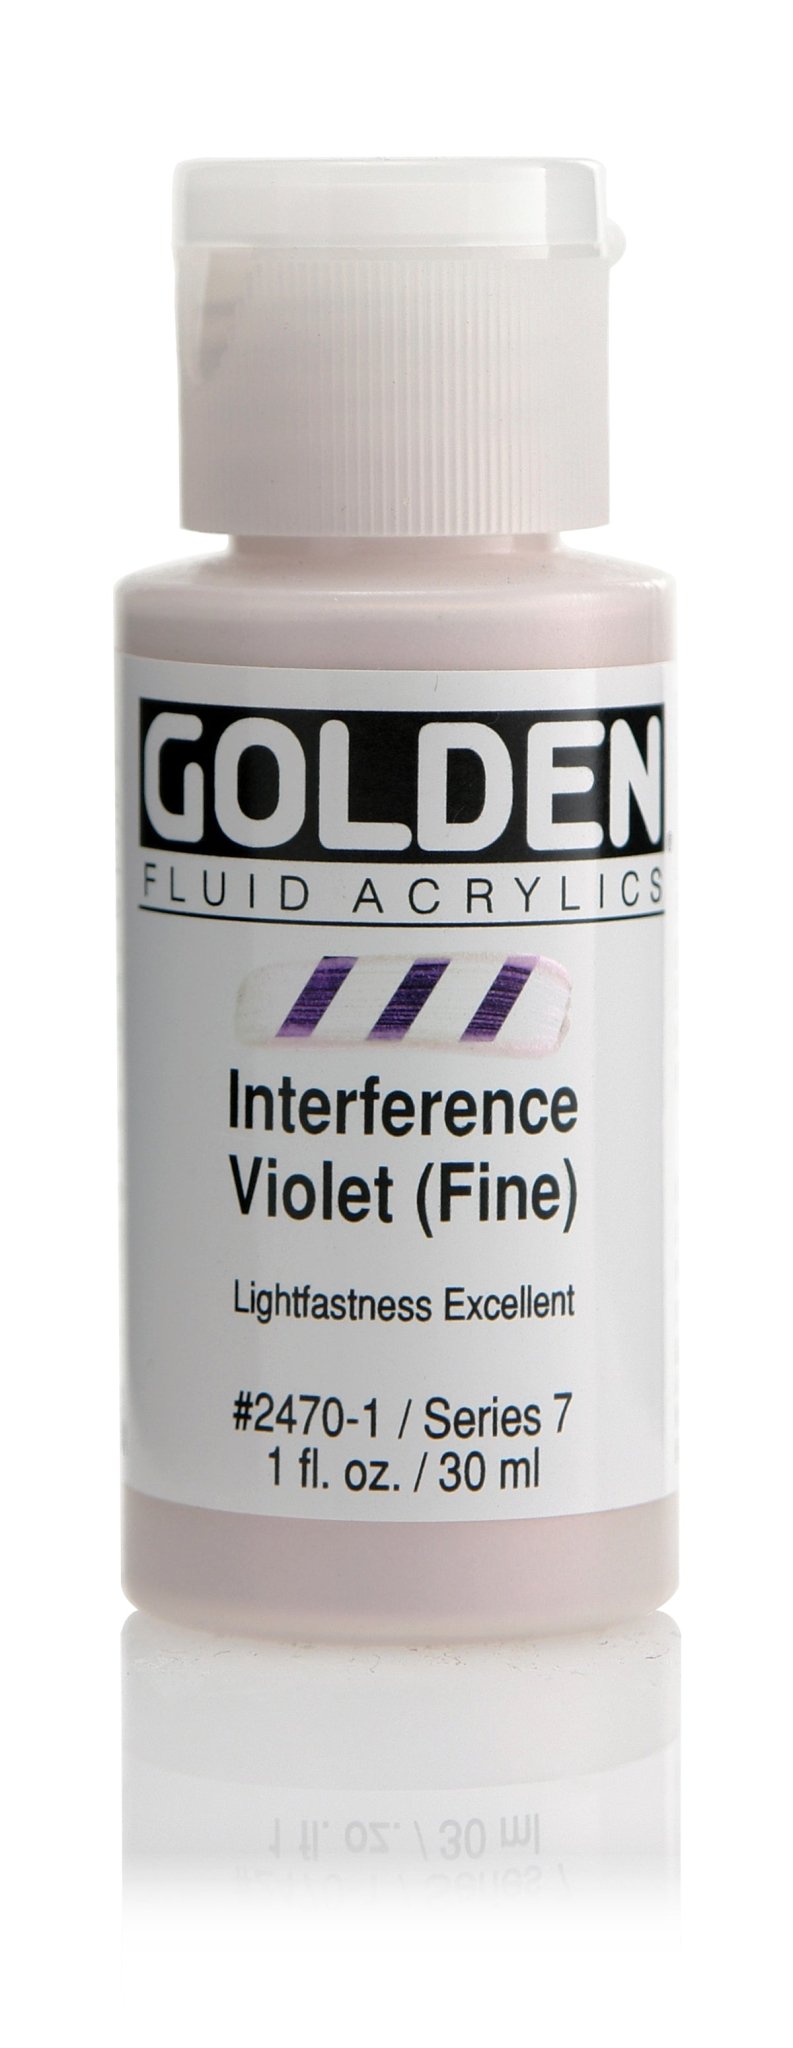 Golden Fluid Acrylics - Interference Violet (Fine) - 30ml - Create A Little Magic (Pty) Ltd